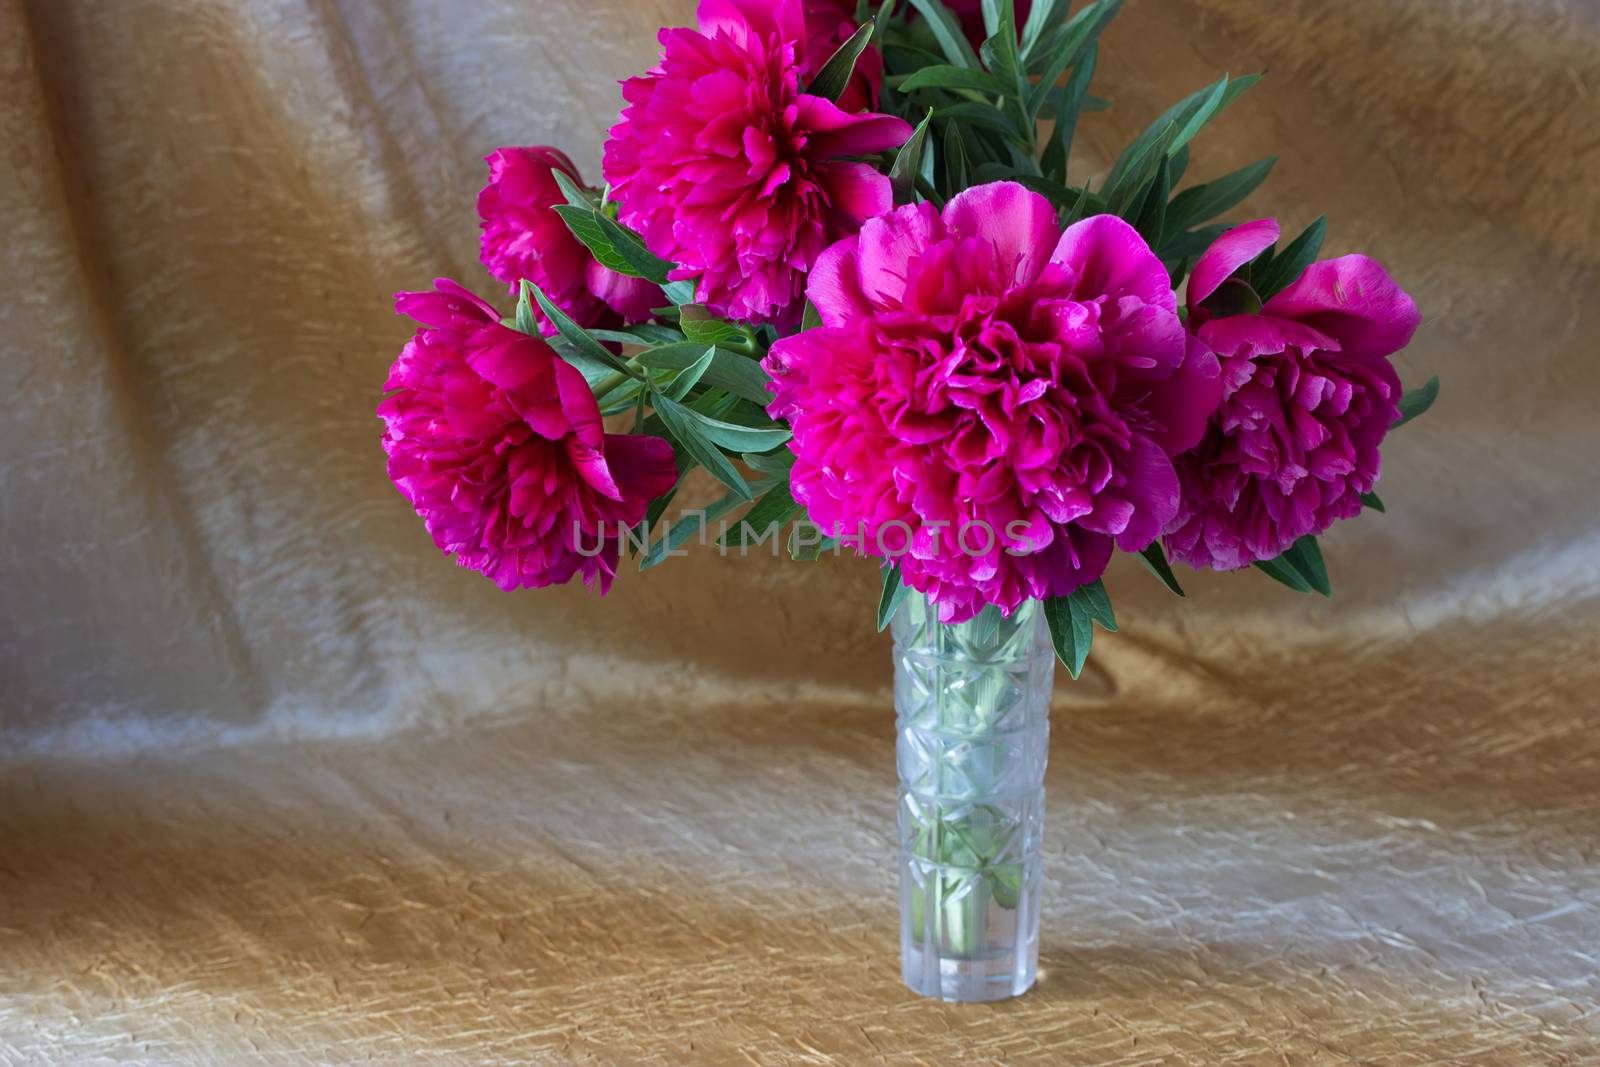 pink flowers in a vase by liwei12